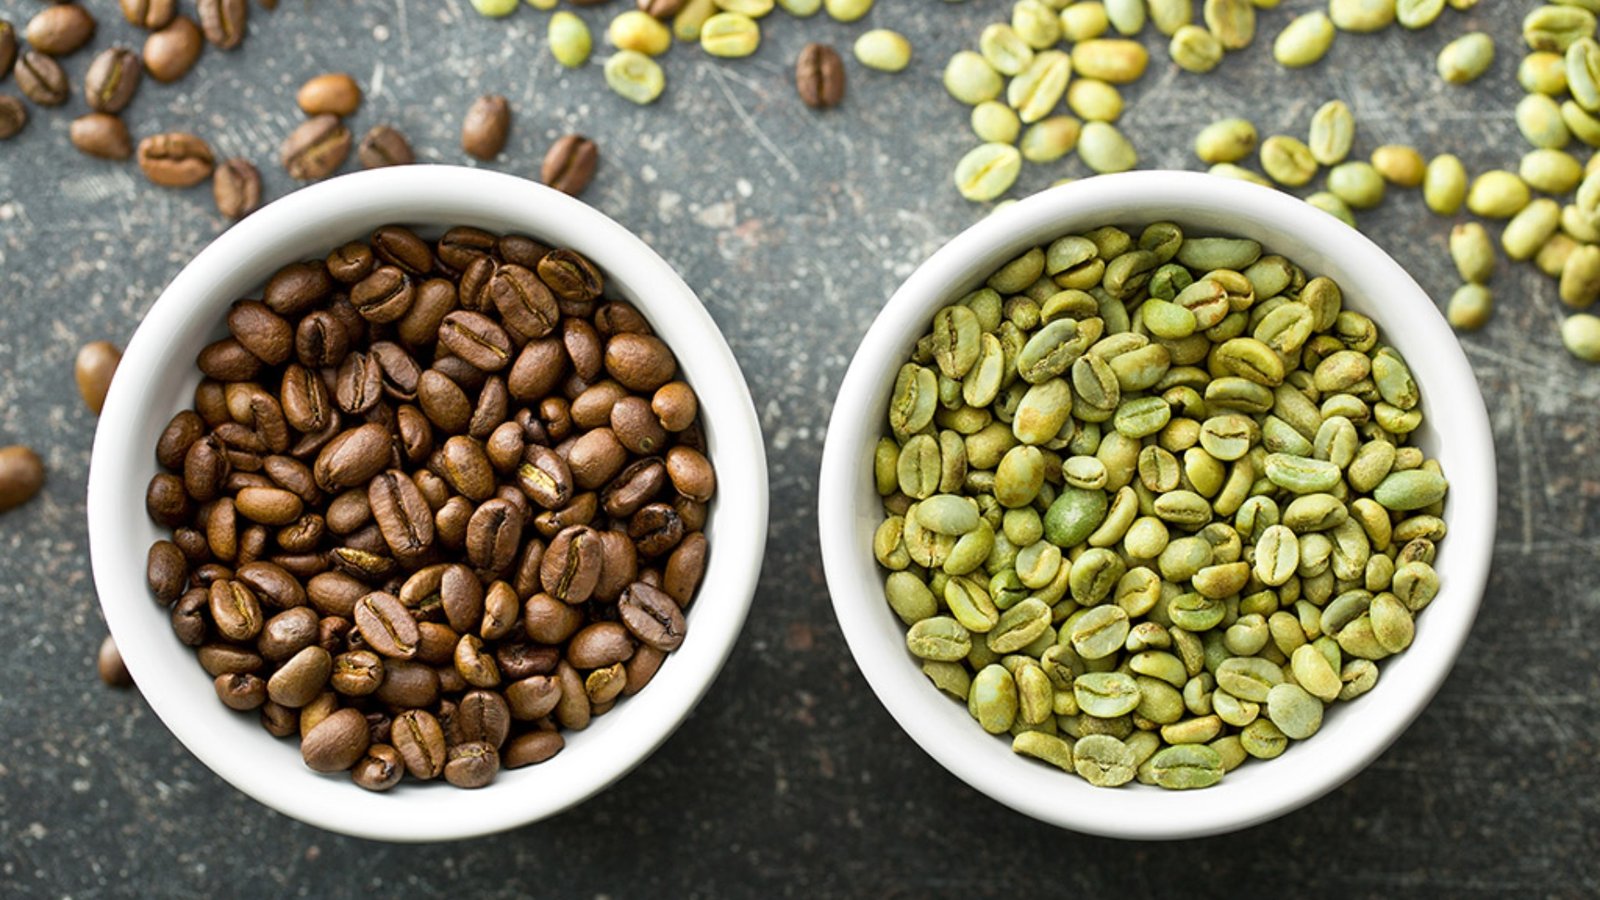 Black Coffee vs Green Coffee